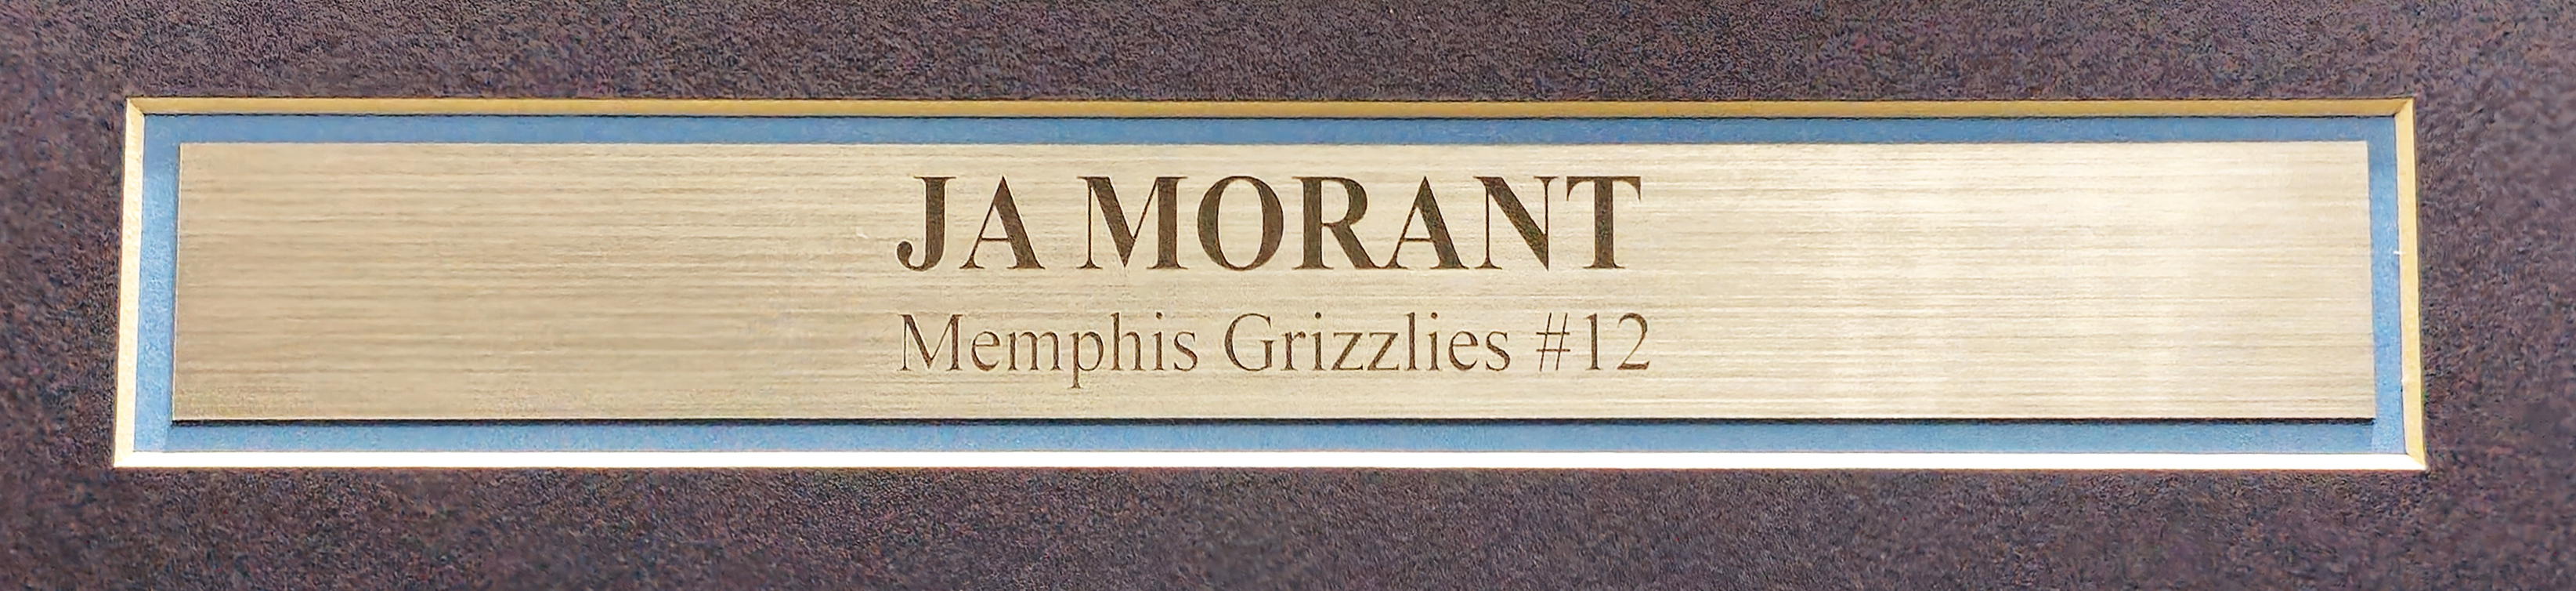 Memphis Grizzlies Ja Morant Autographed Light Blue Fanatics Jersey